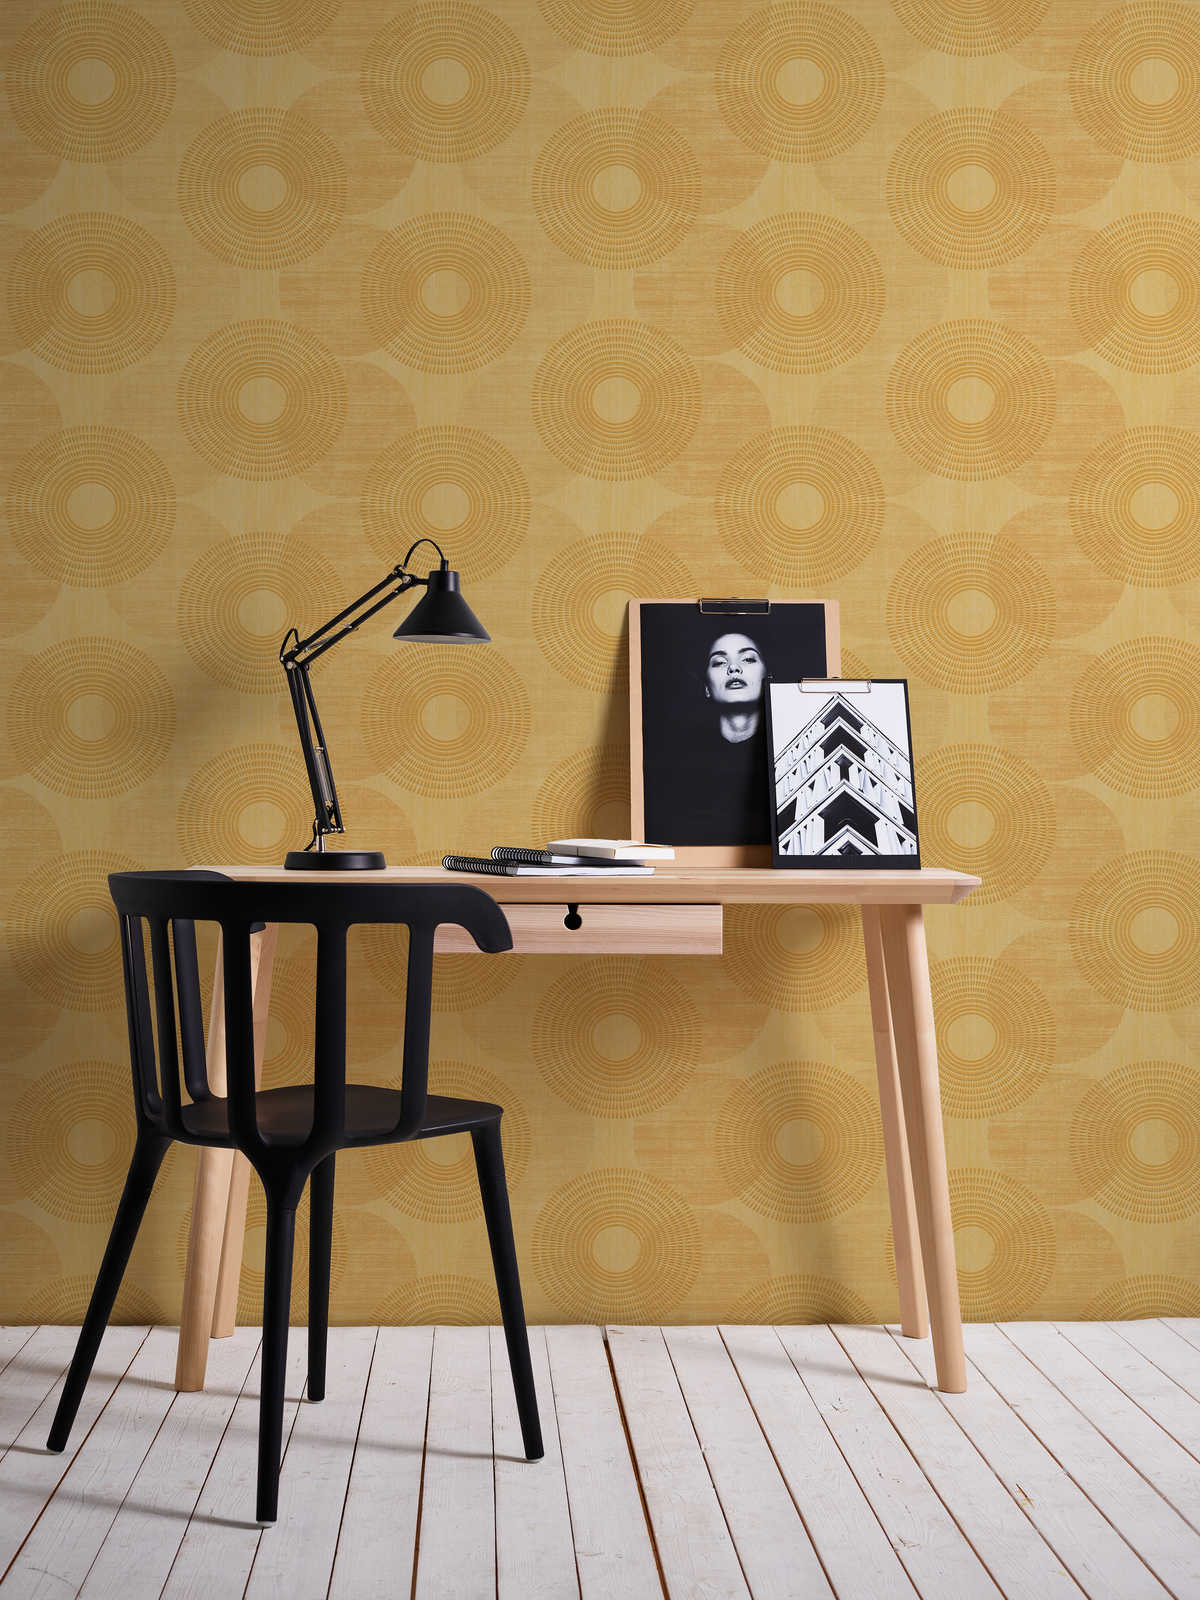             Scandinavian style wallpaper with modern pattern - yellow
        